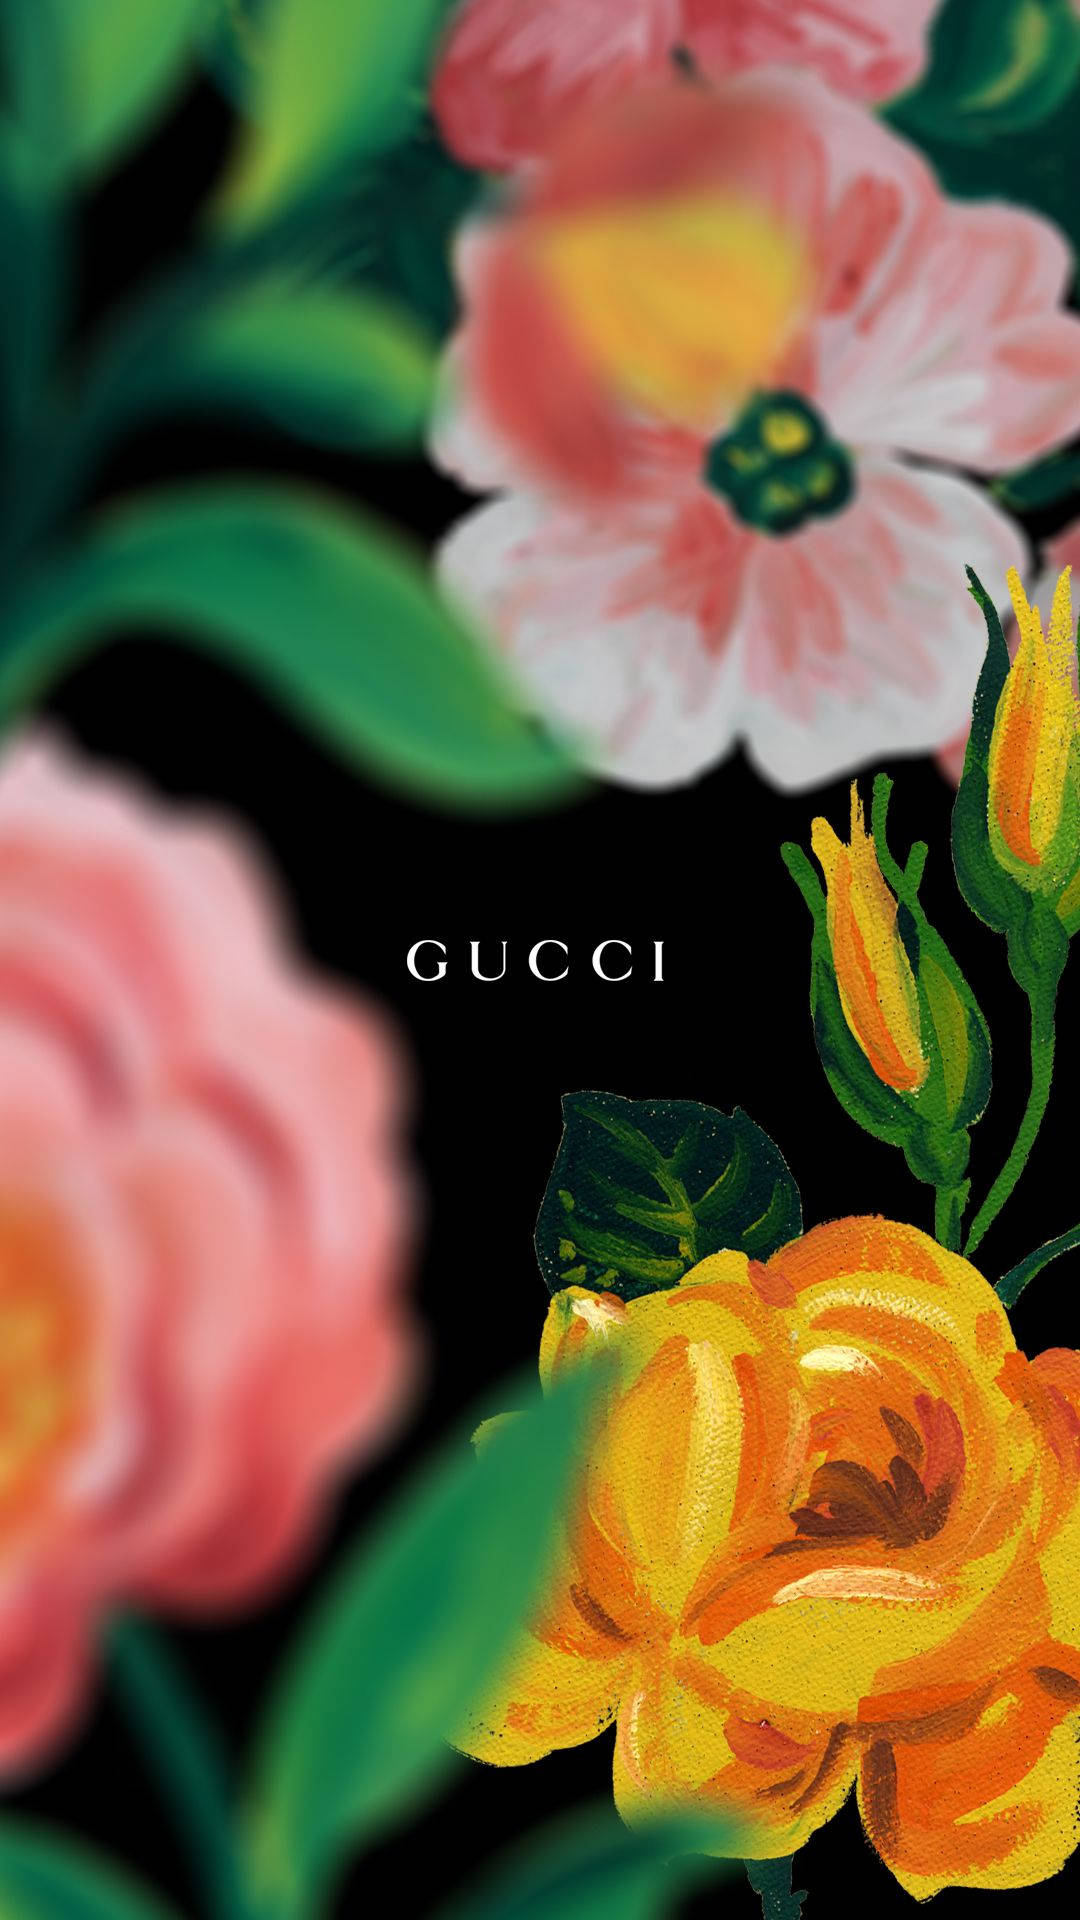 Gucci 1080X1920 wallpaper